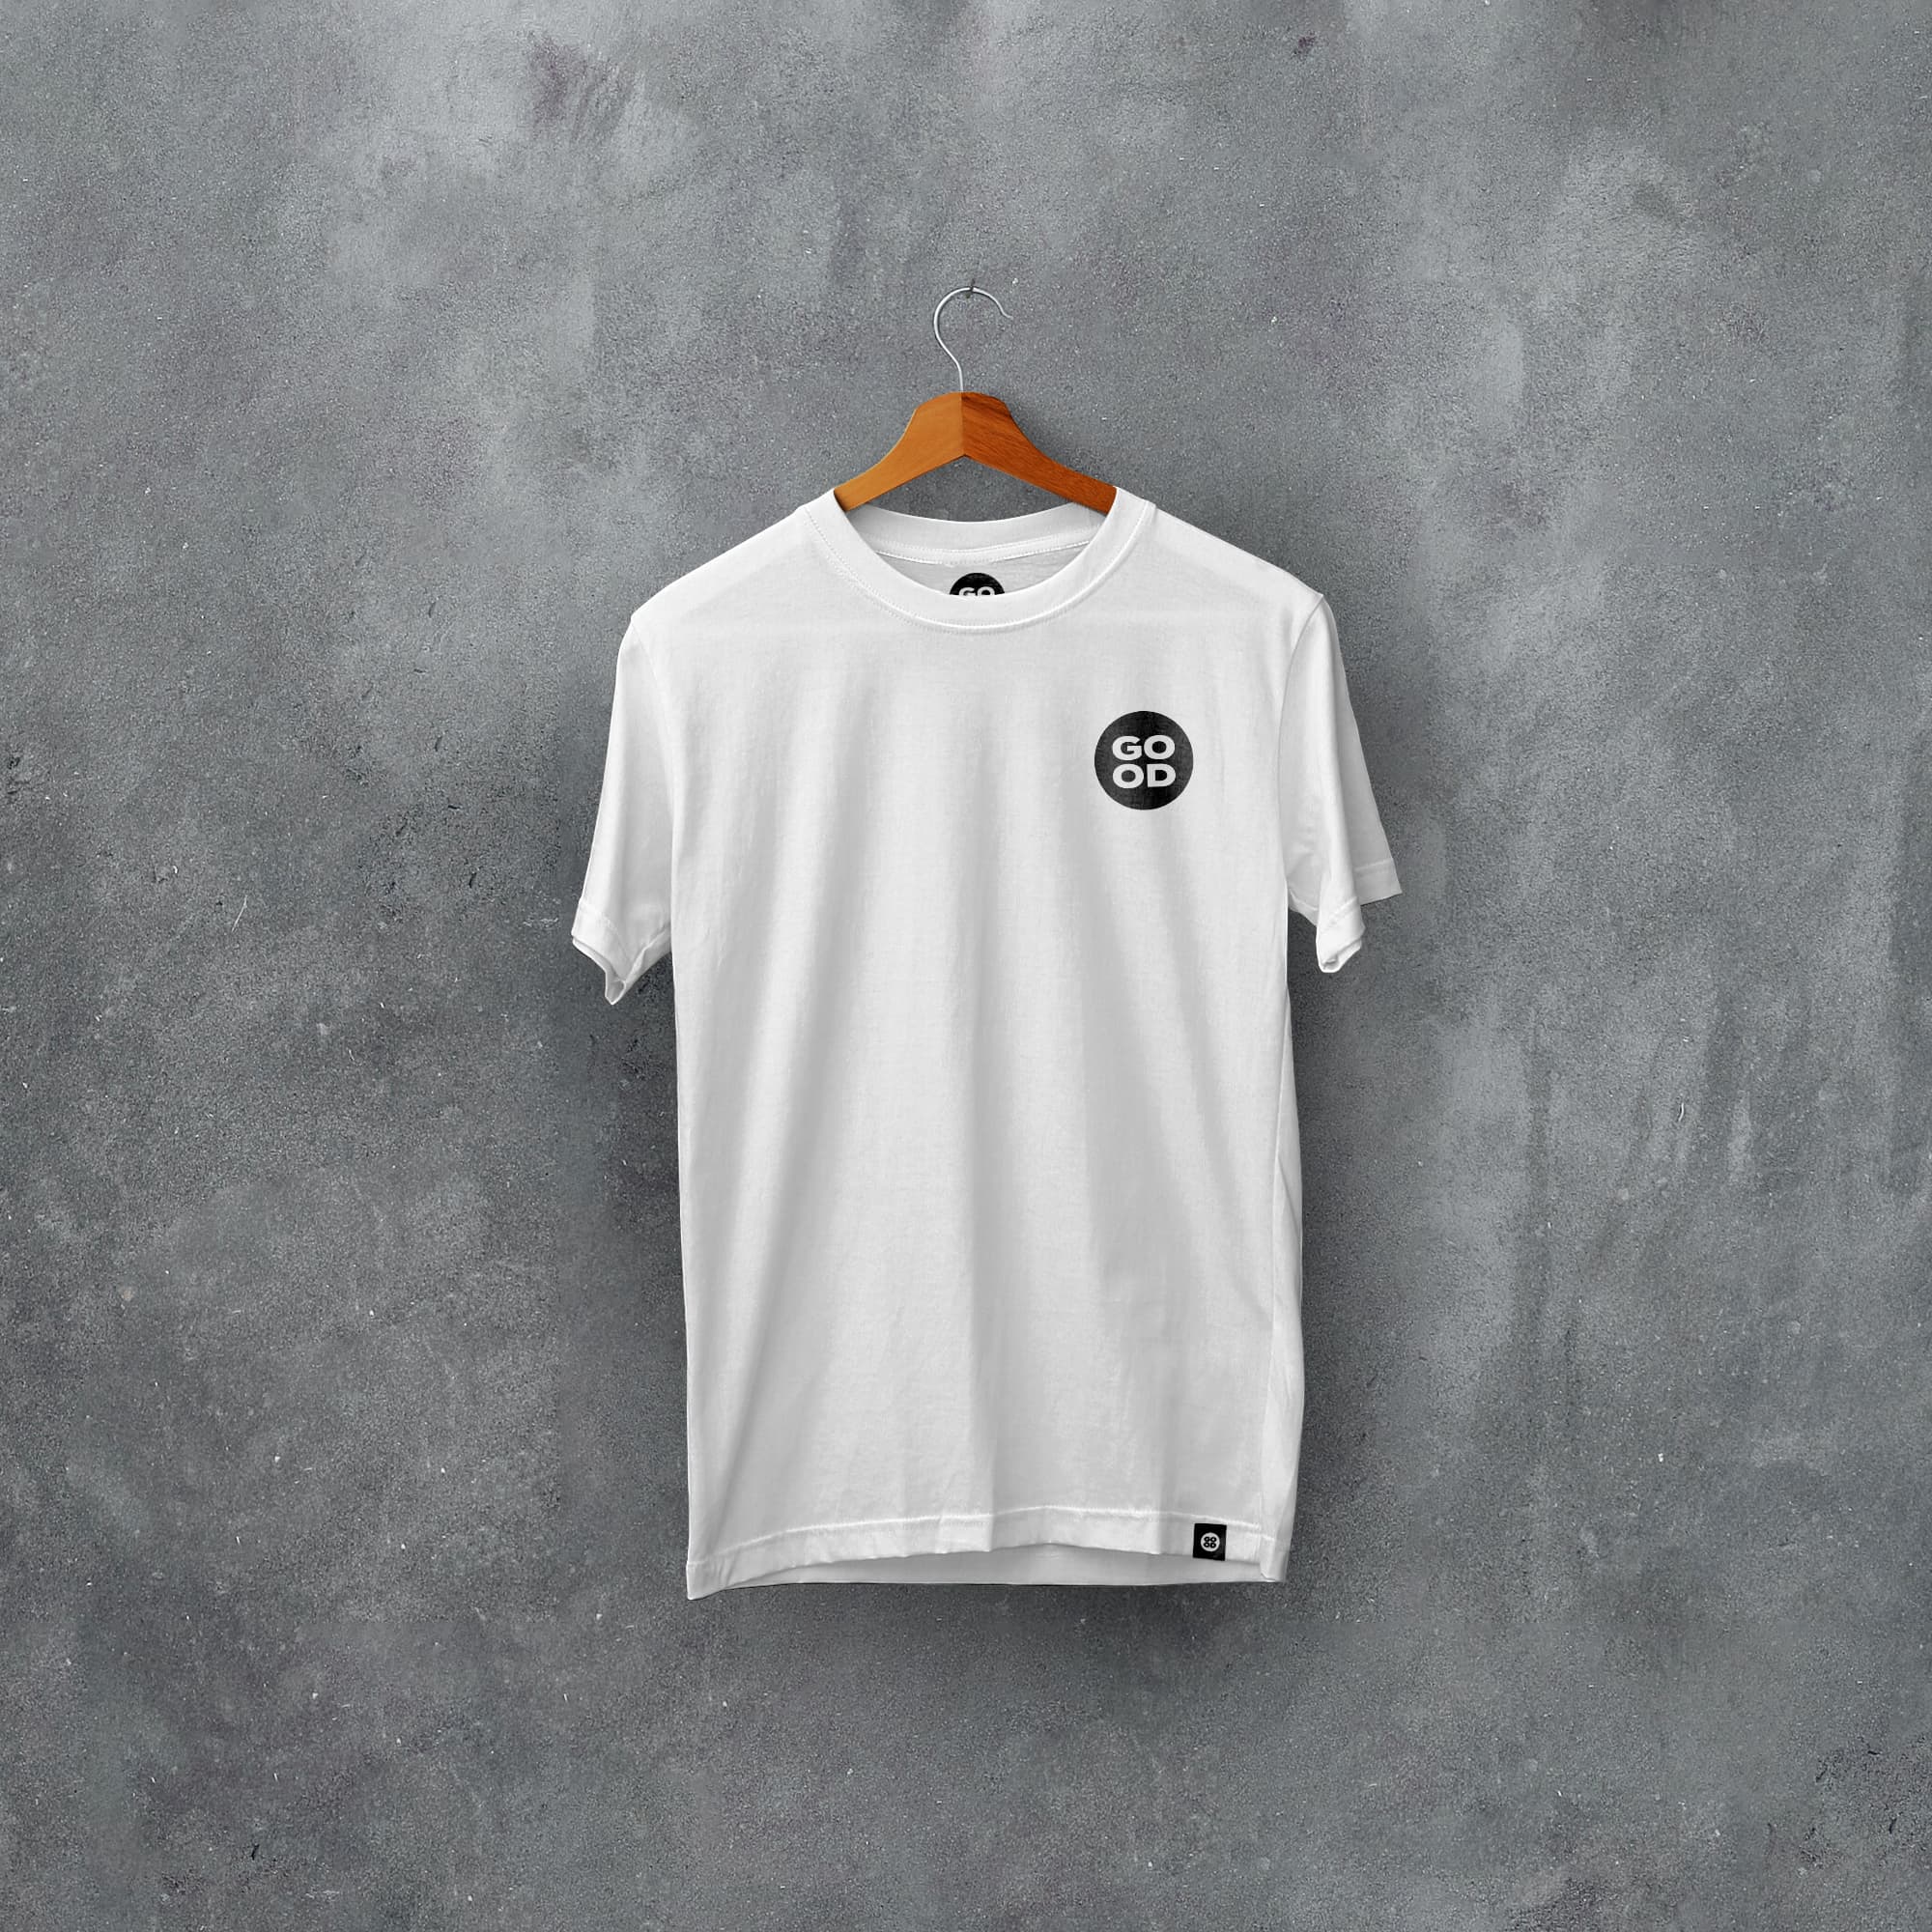 France Classic Kits Football T-Shirt